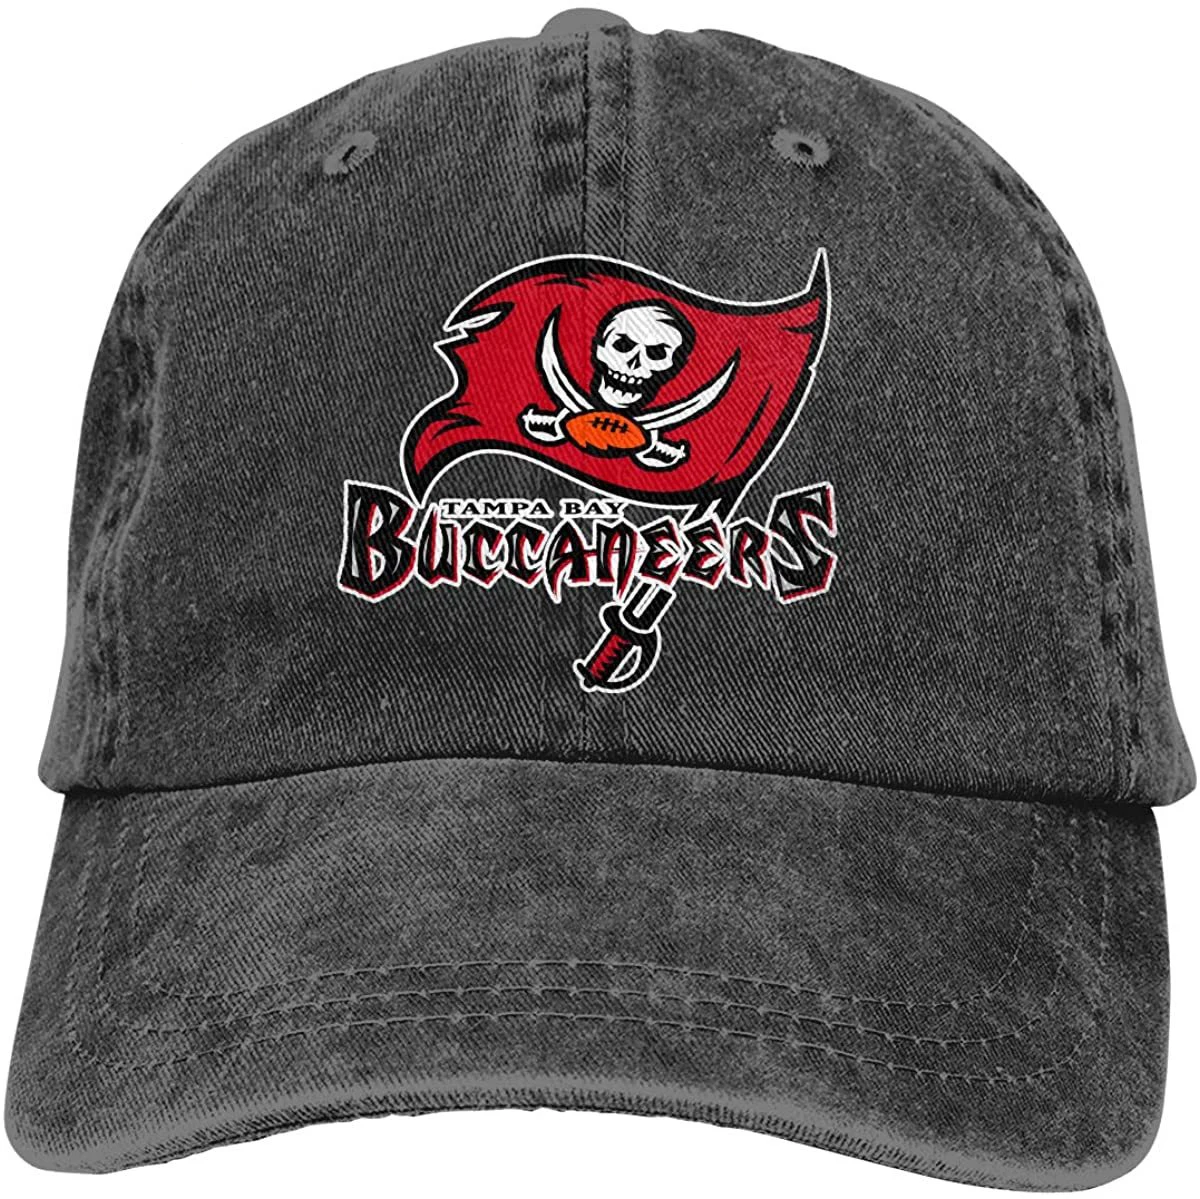 

Franklin Sports Buccaneers Hat New Logo 2020 Football Hat Adjustable Black of Tampa Bay Fans